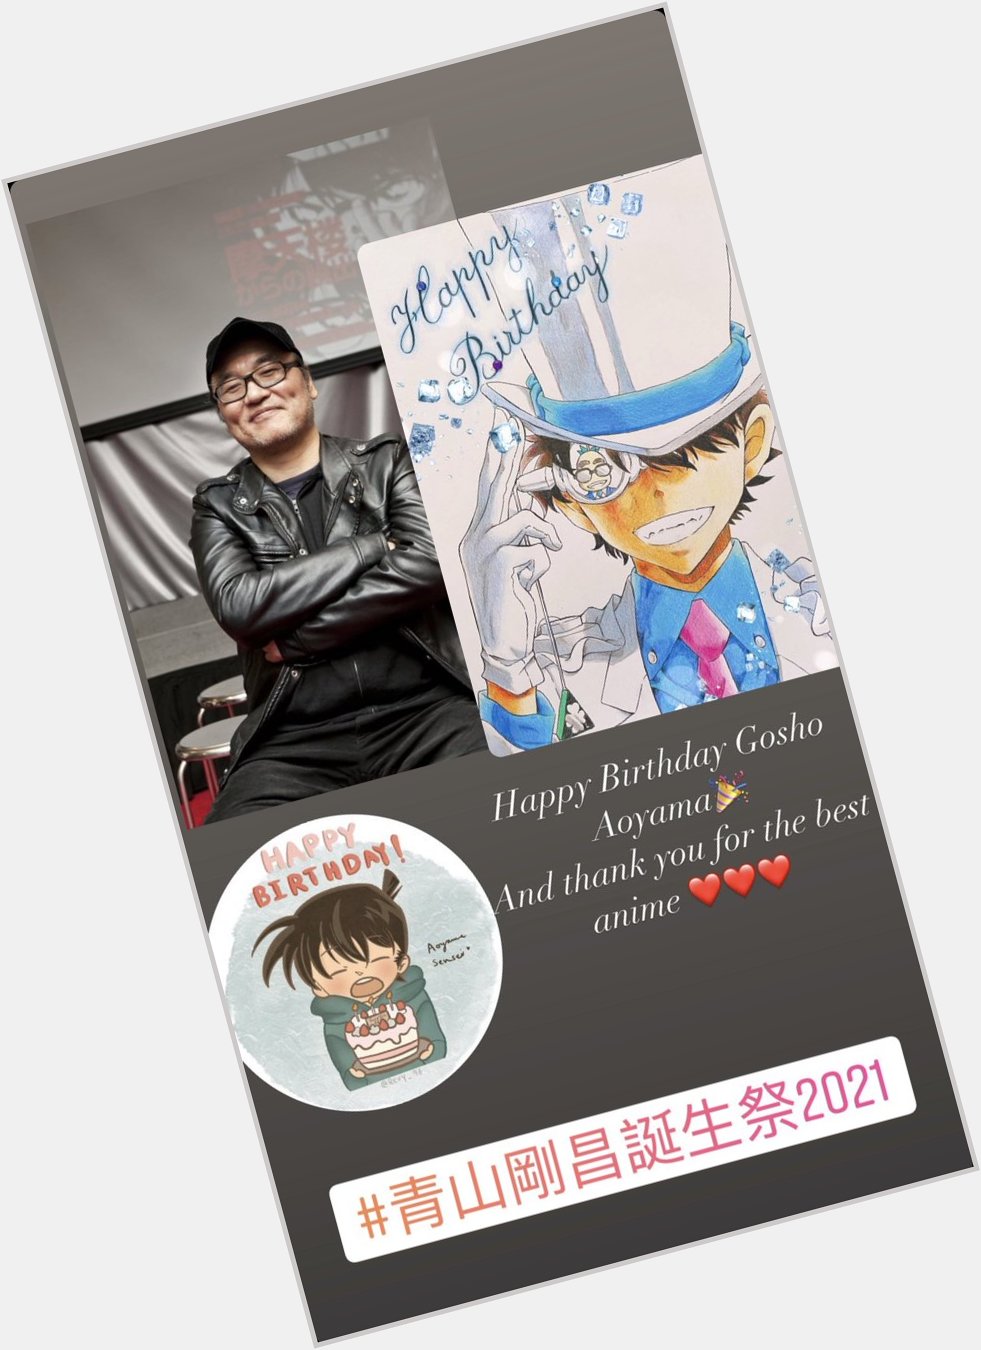 Happy Birthday Gosho Aoyama Sensi   and thank you for the best anime       